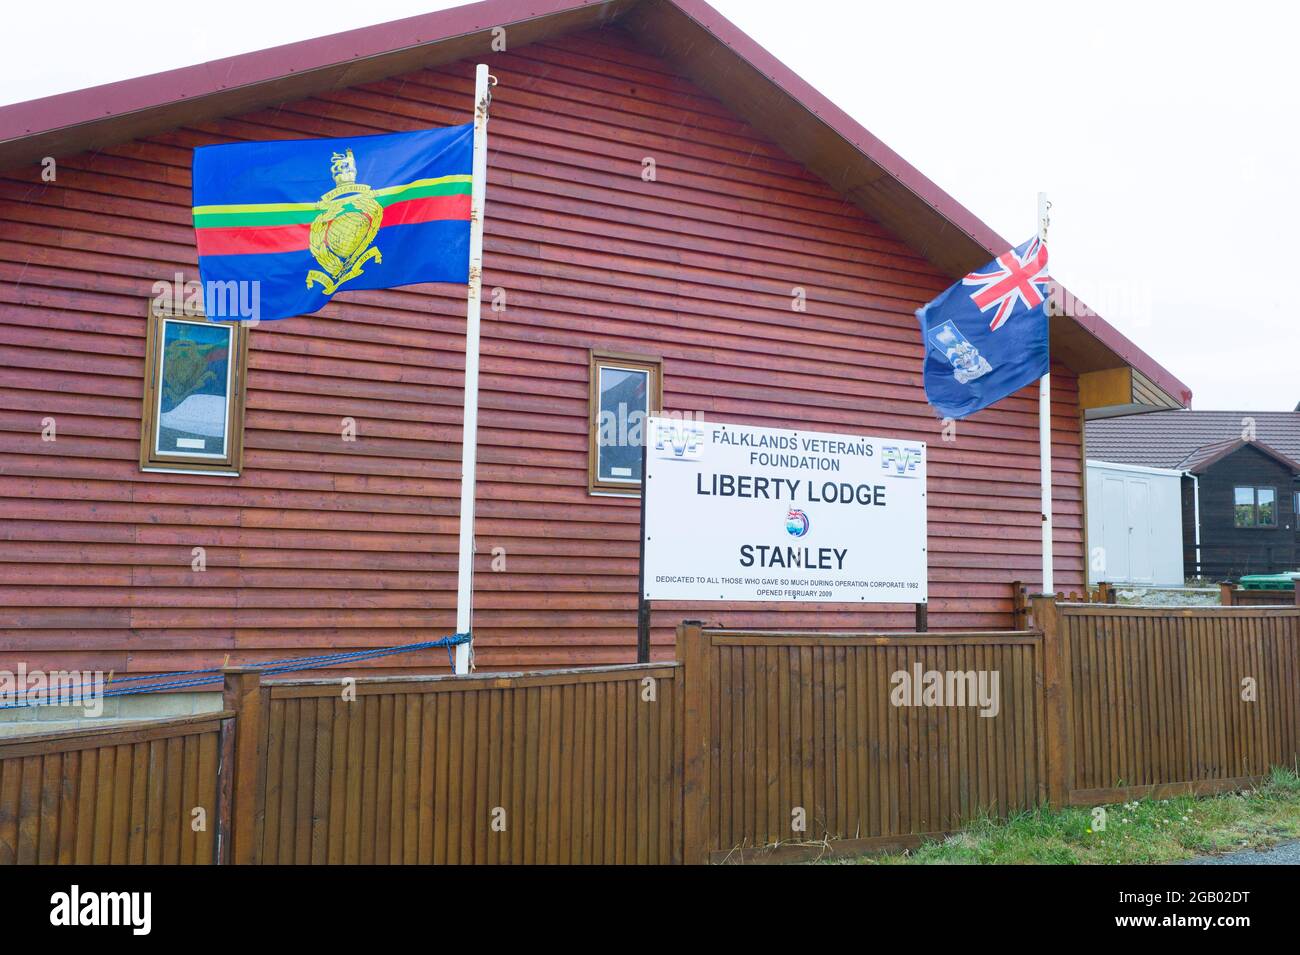 liberty Lodge Port Stanley Falkland Islands - Falkland Veterans Foundation Stockfoto